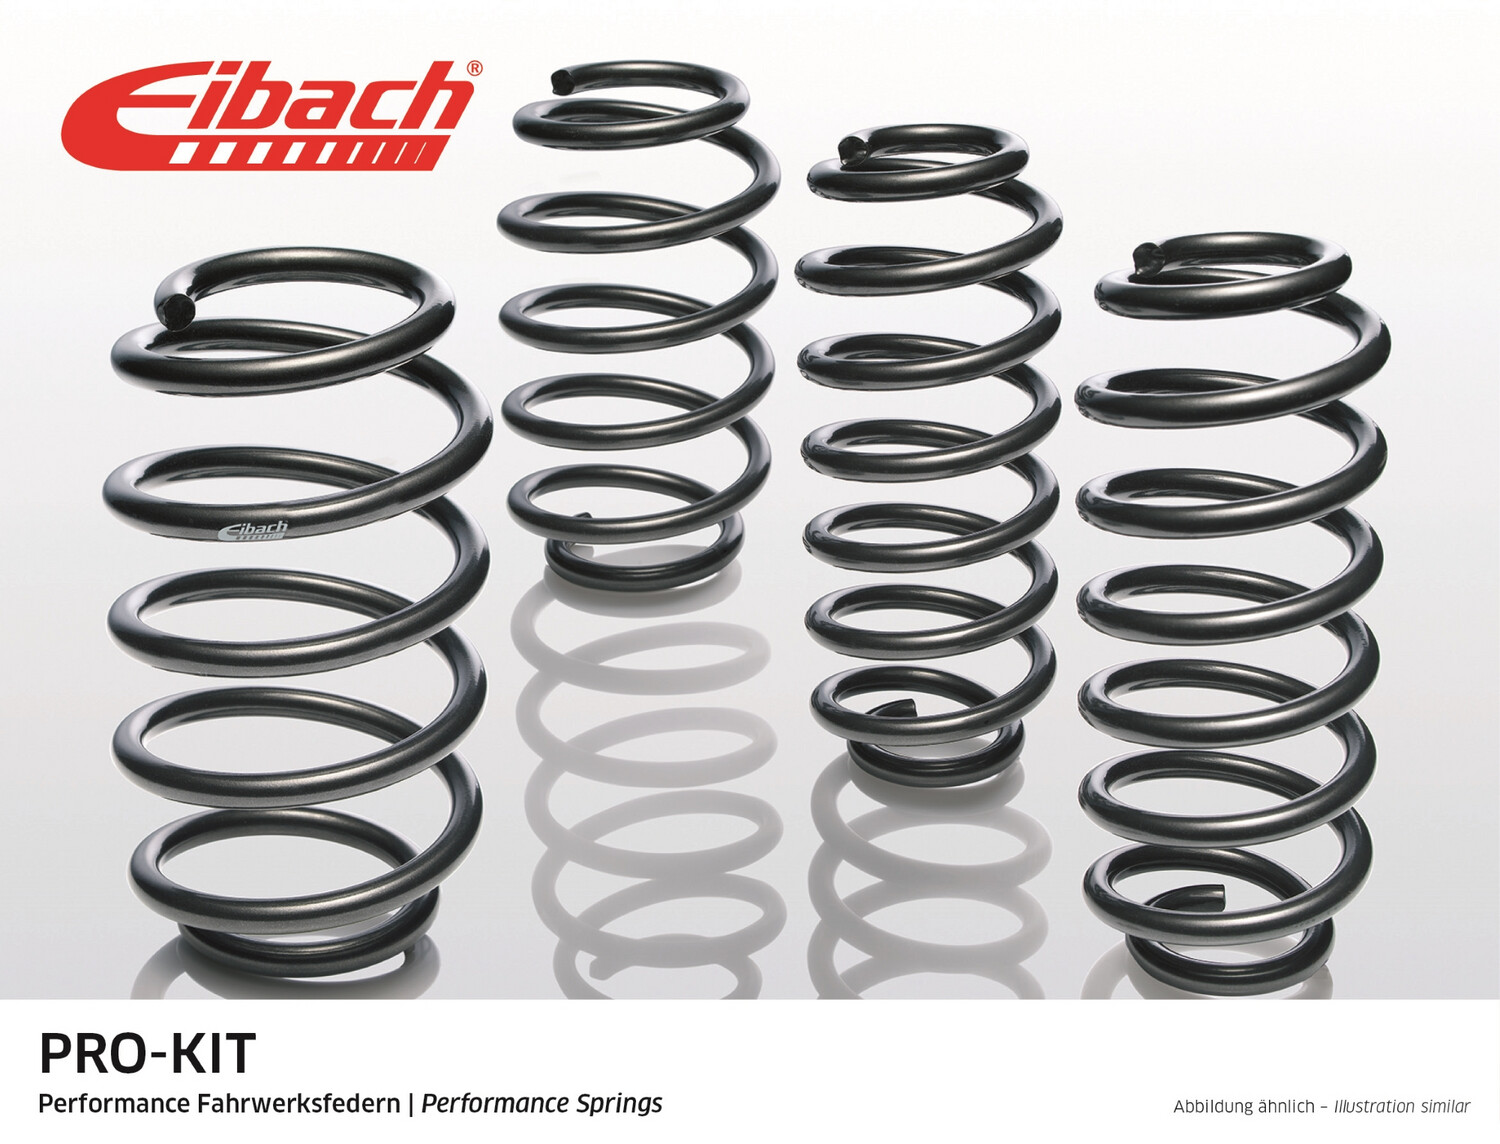 Mazda 3 BL Petrol - Eibach Pro-Kit Lowering Spring Kit